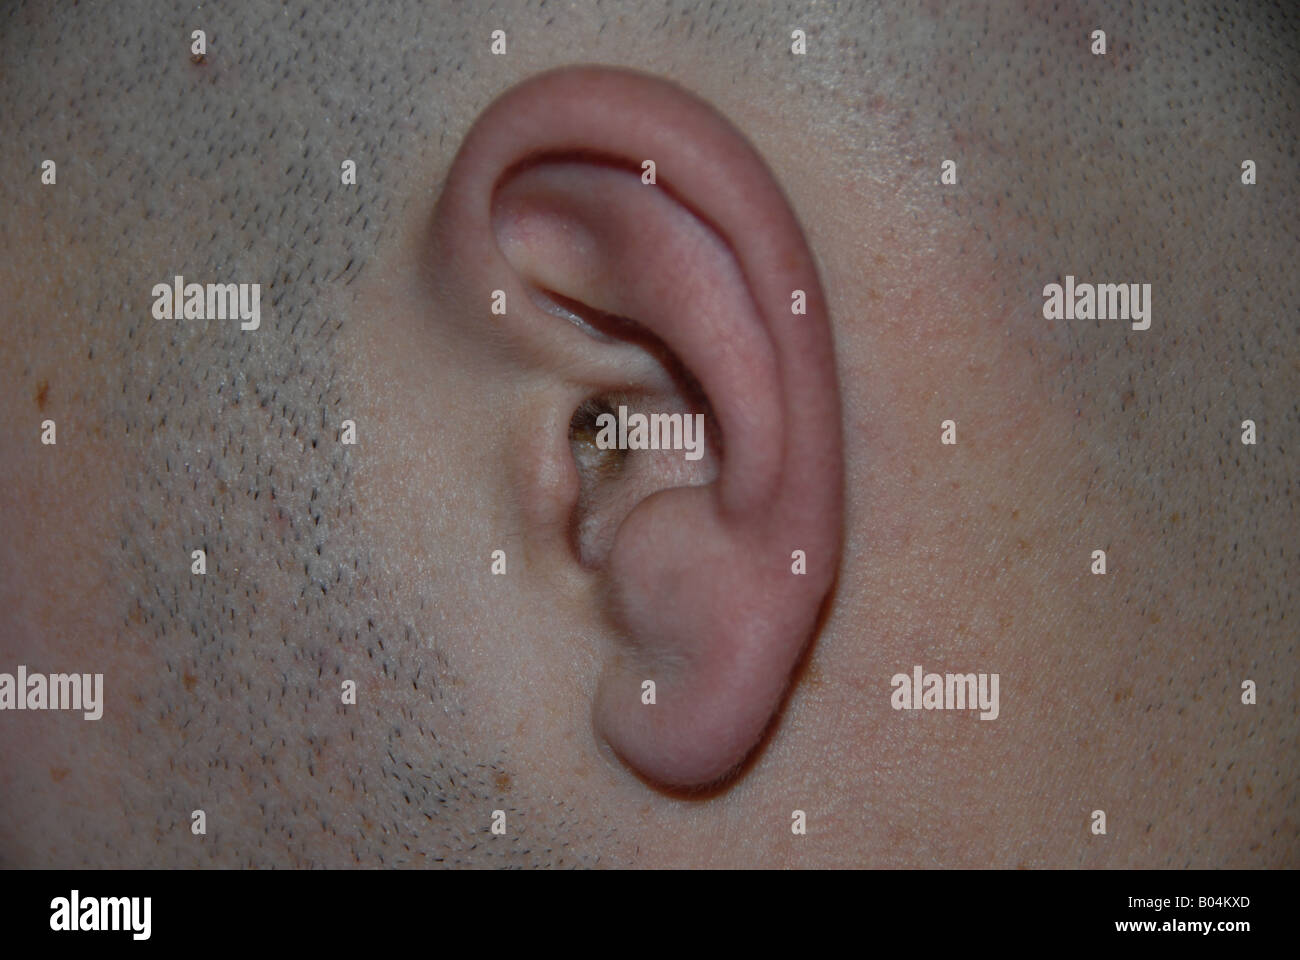 A human ear lobe. Stock Photo